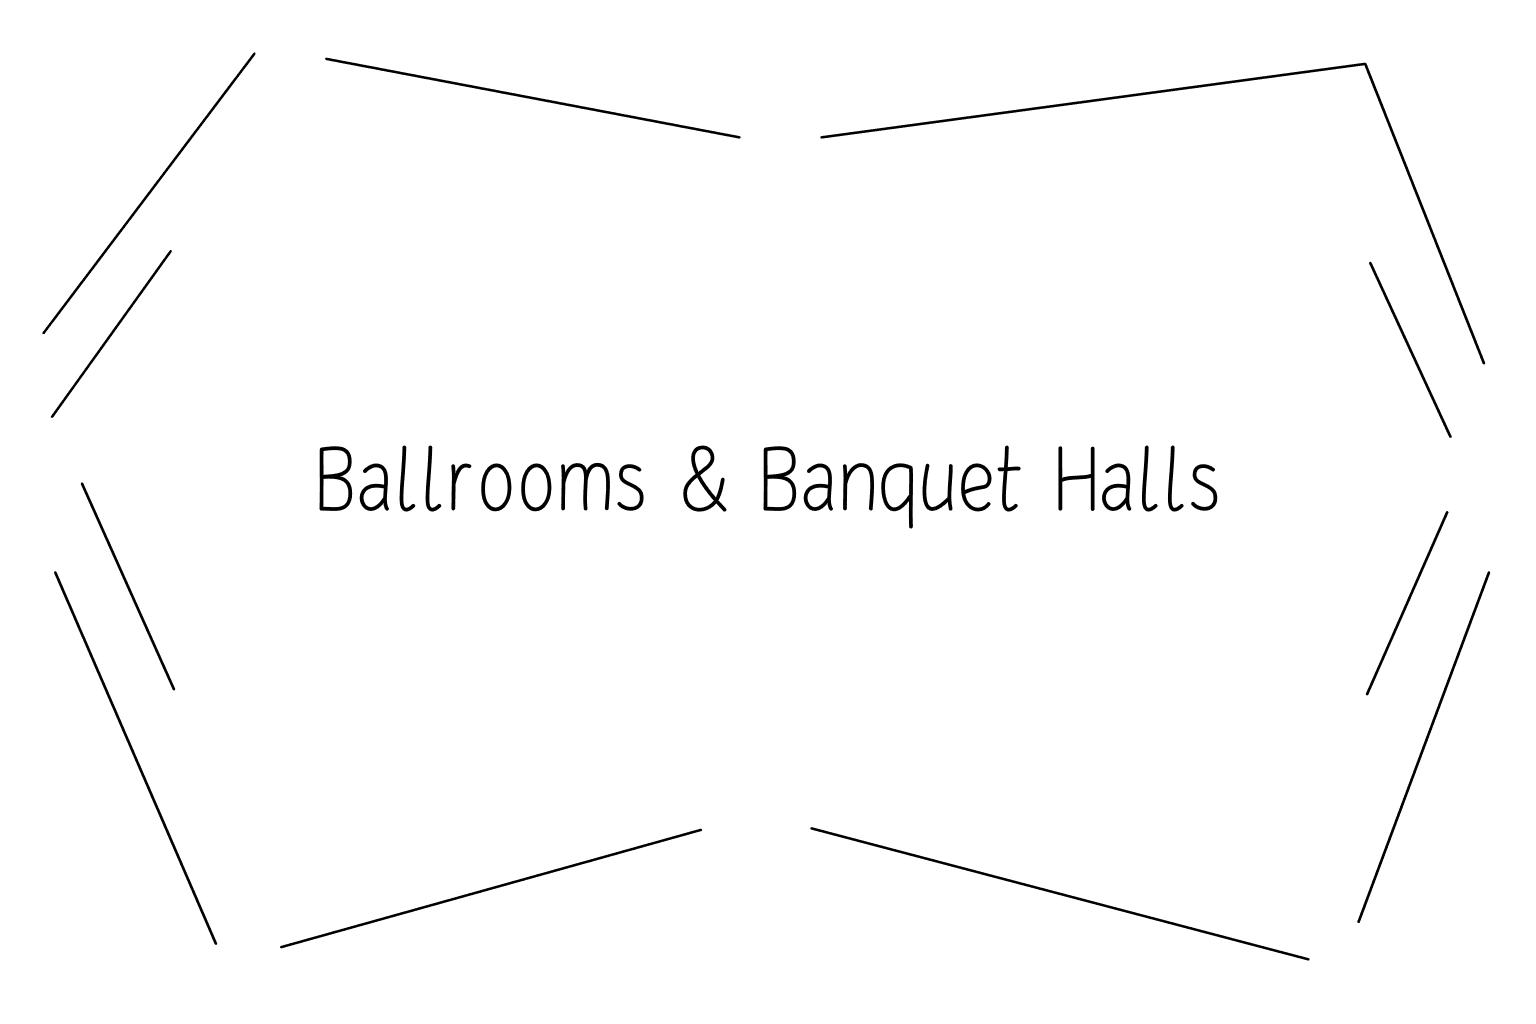 Illustration of wedding banquet hall